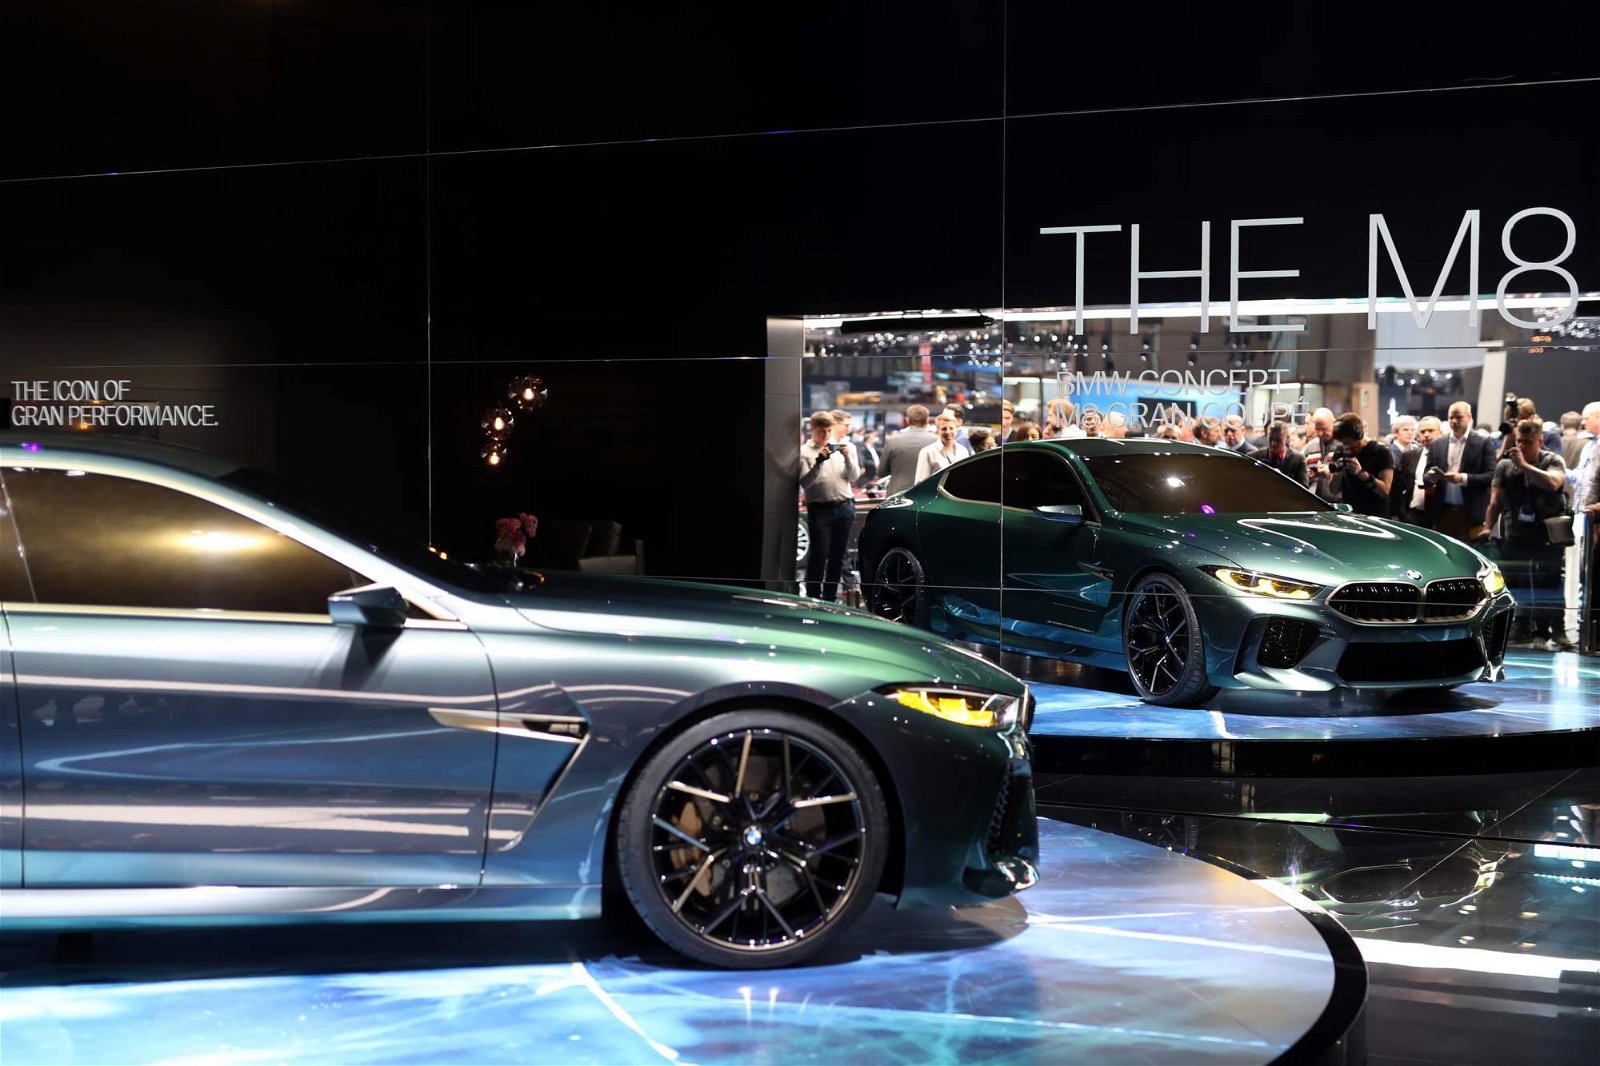 BMW-Concept-M8-Gran-Coupe-at-2018-Geneva-Motor-Show-15